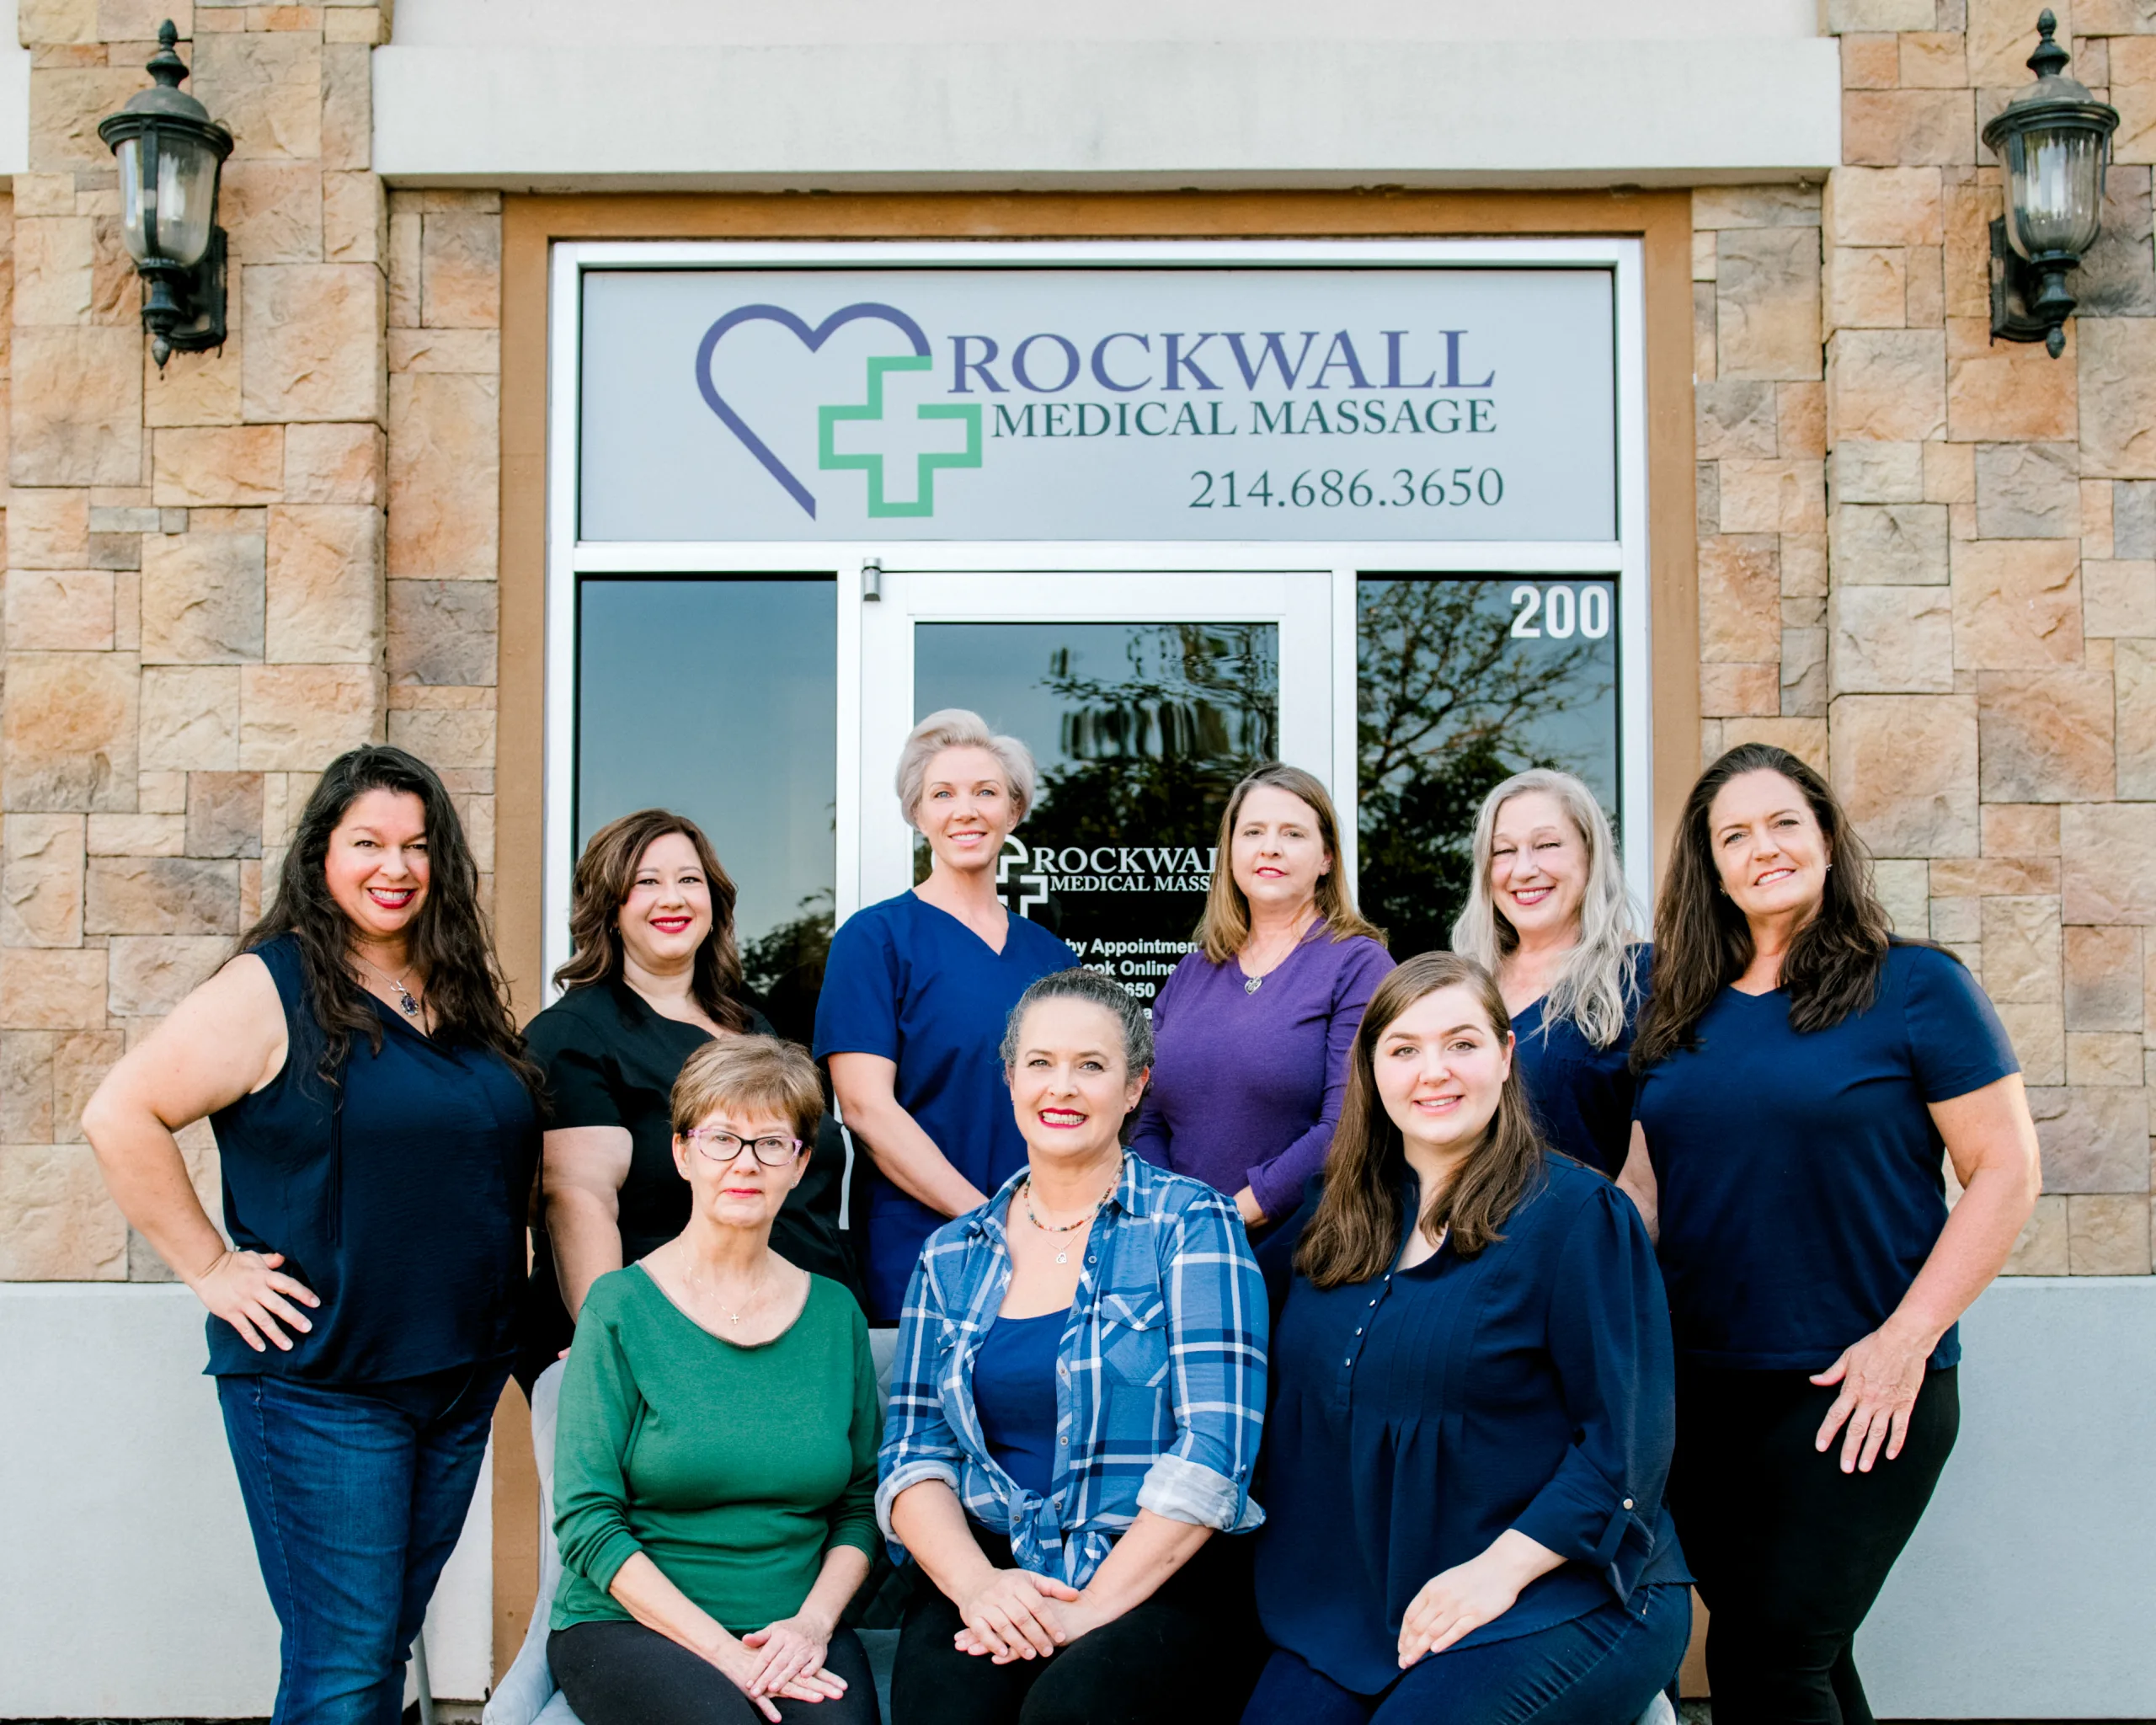 Rockwall Medical Massage